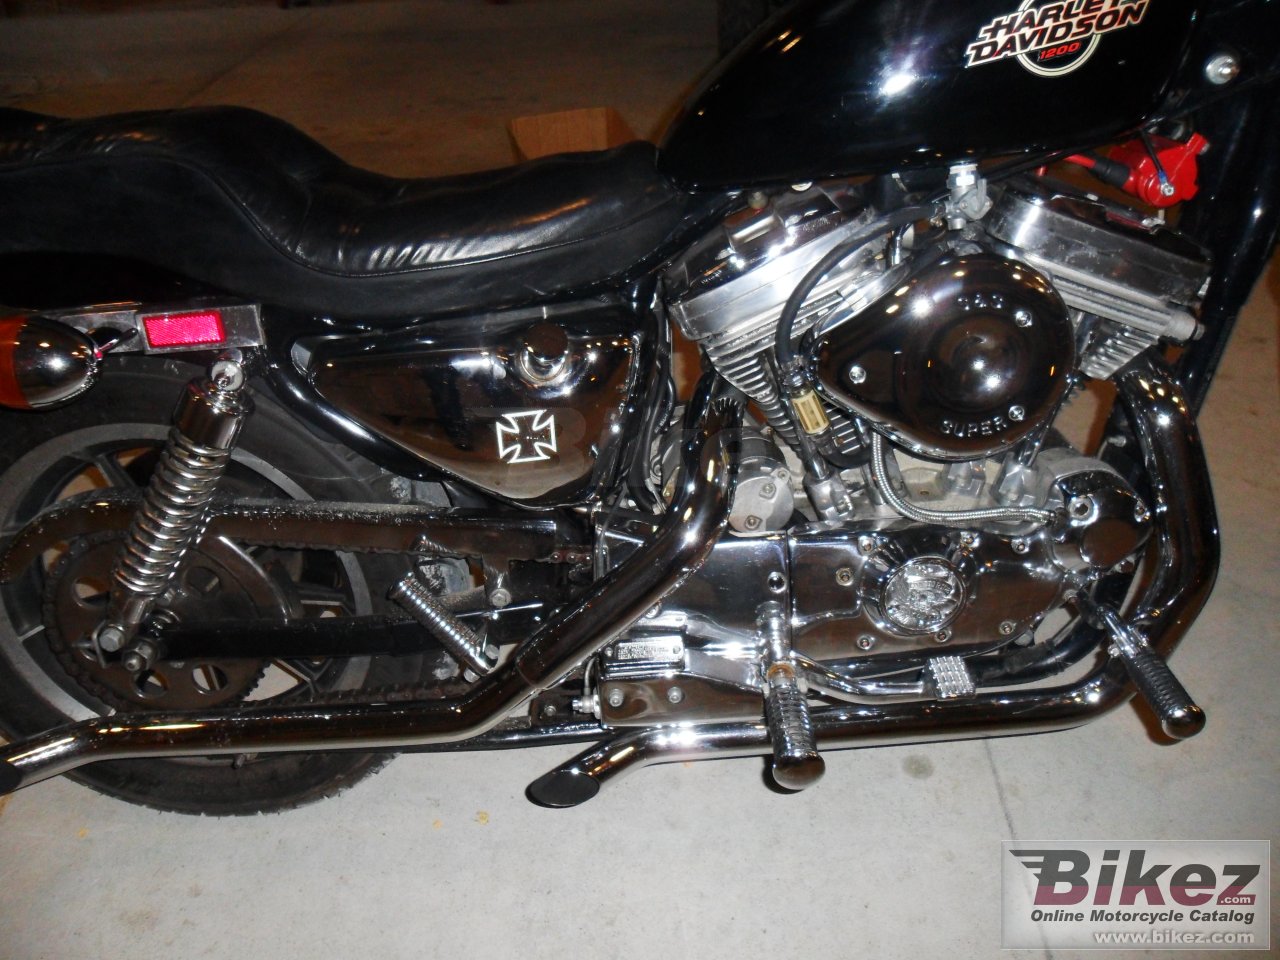 Harley-Davidson XLH Sportster 1200